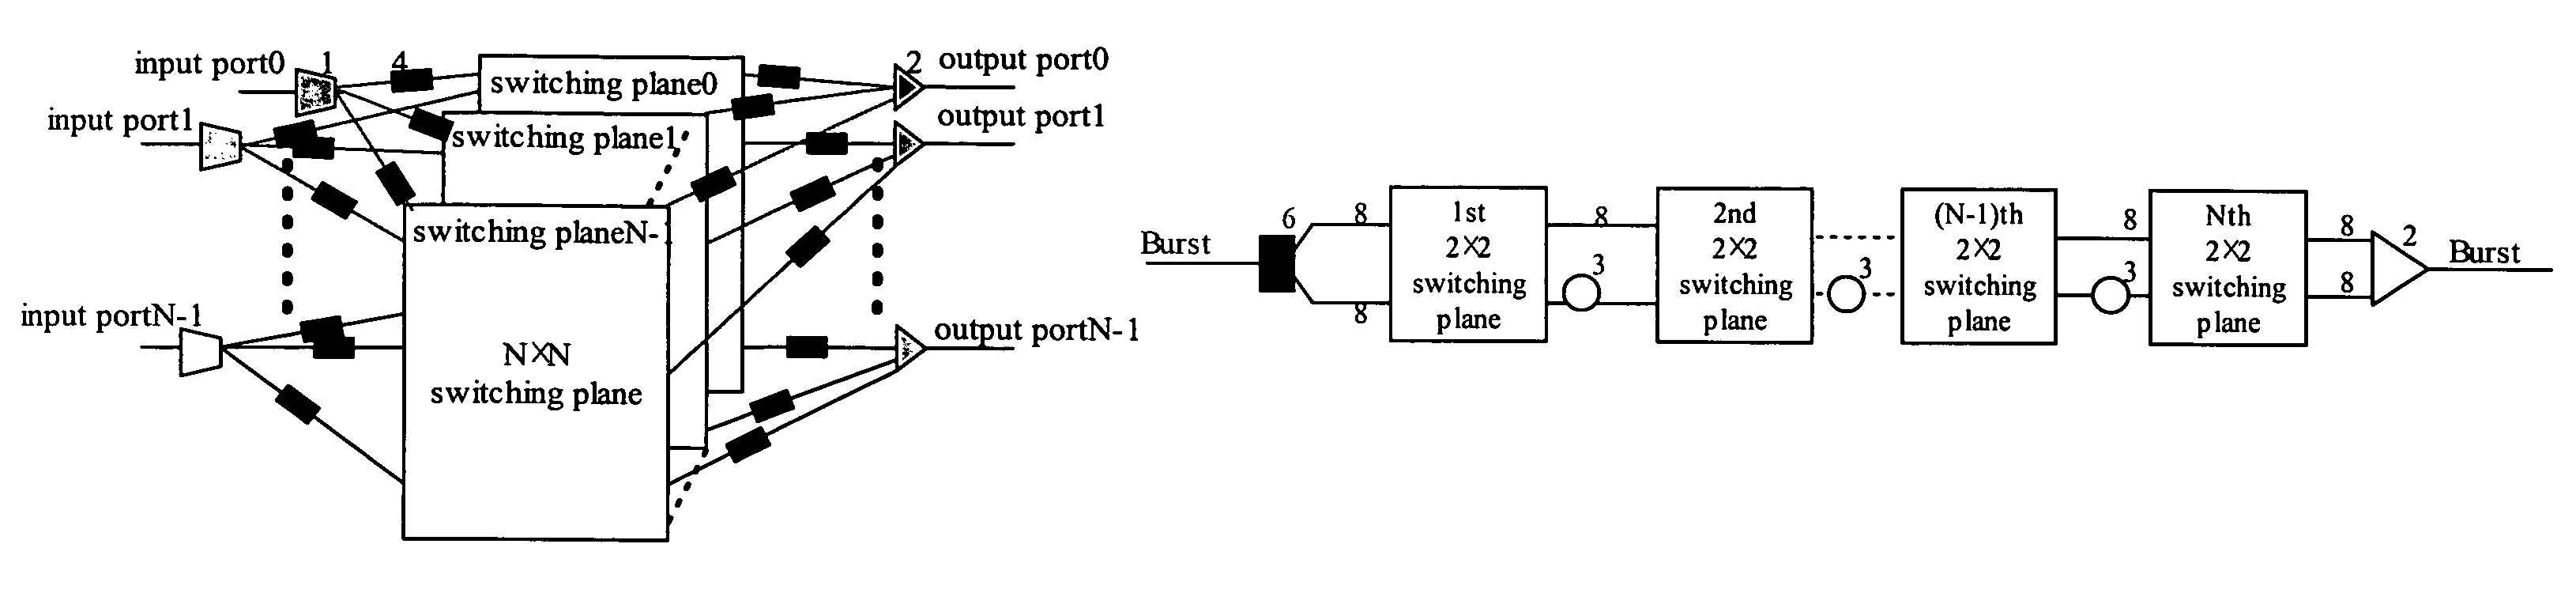 Optical burst switching node with internal speedup